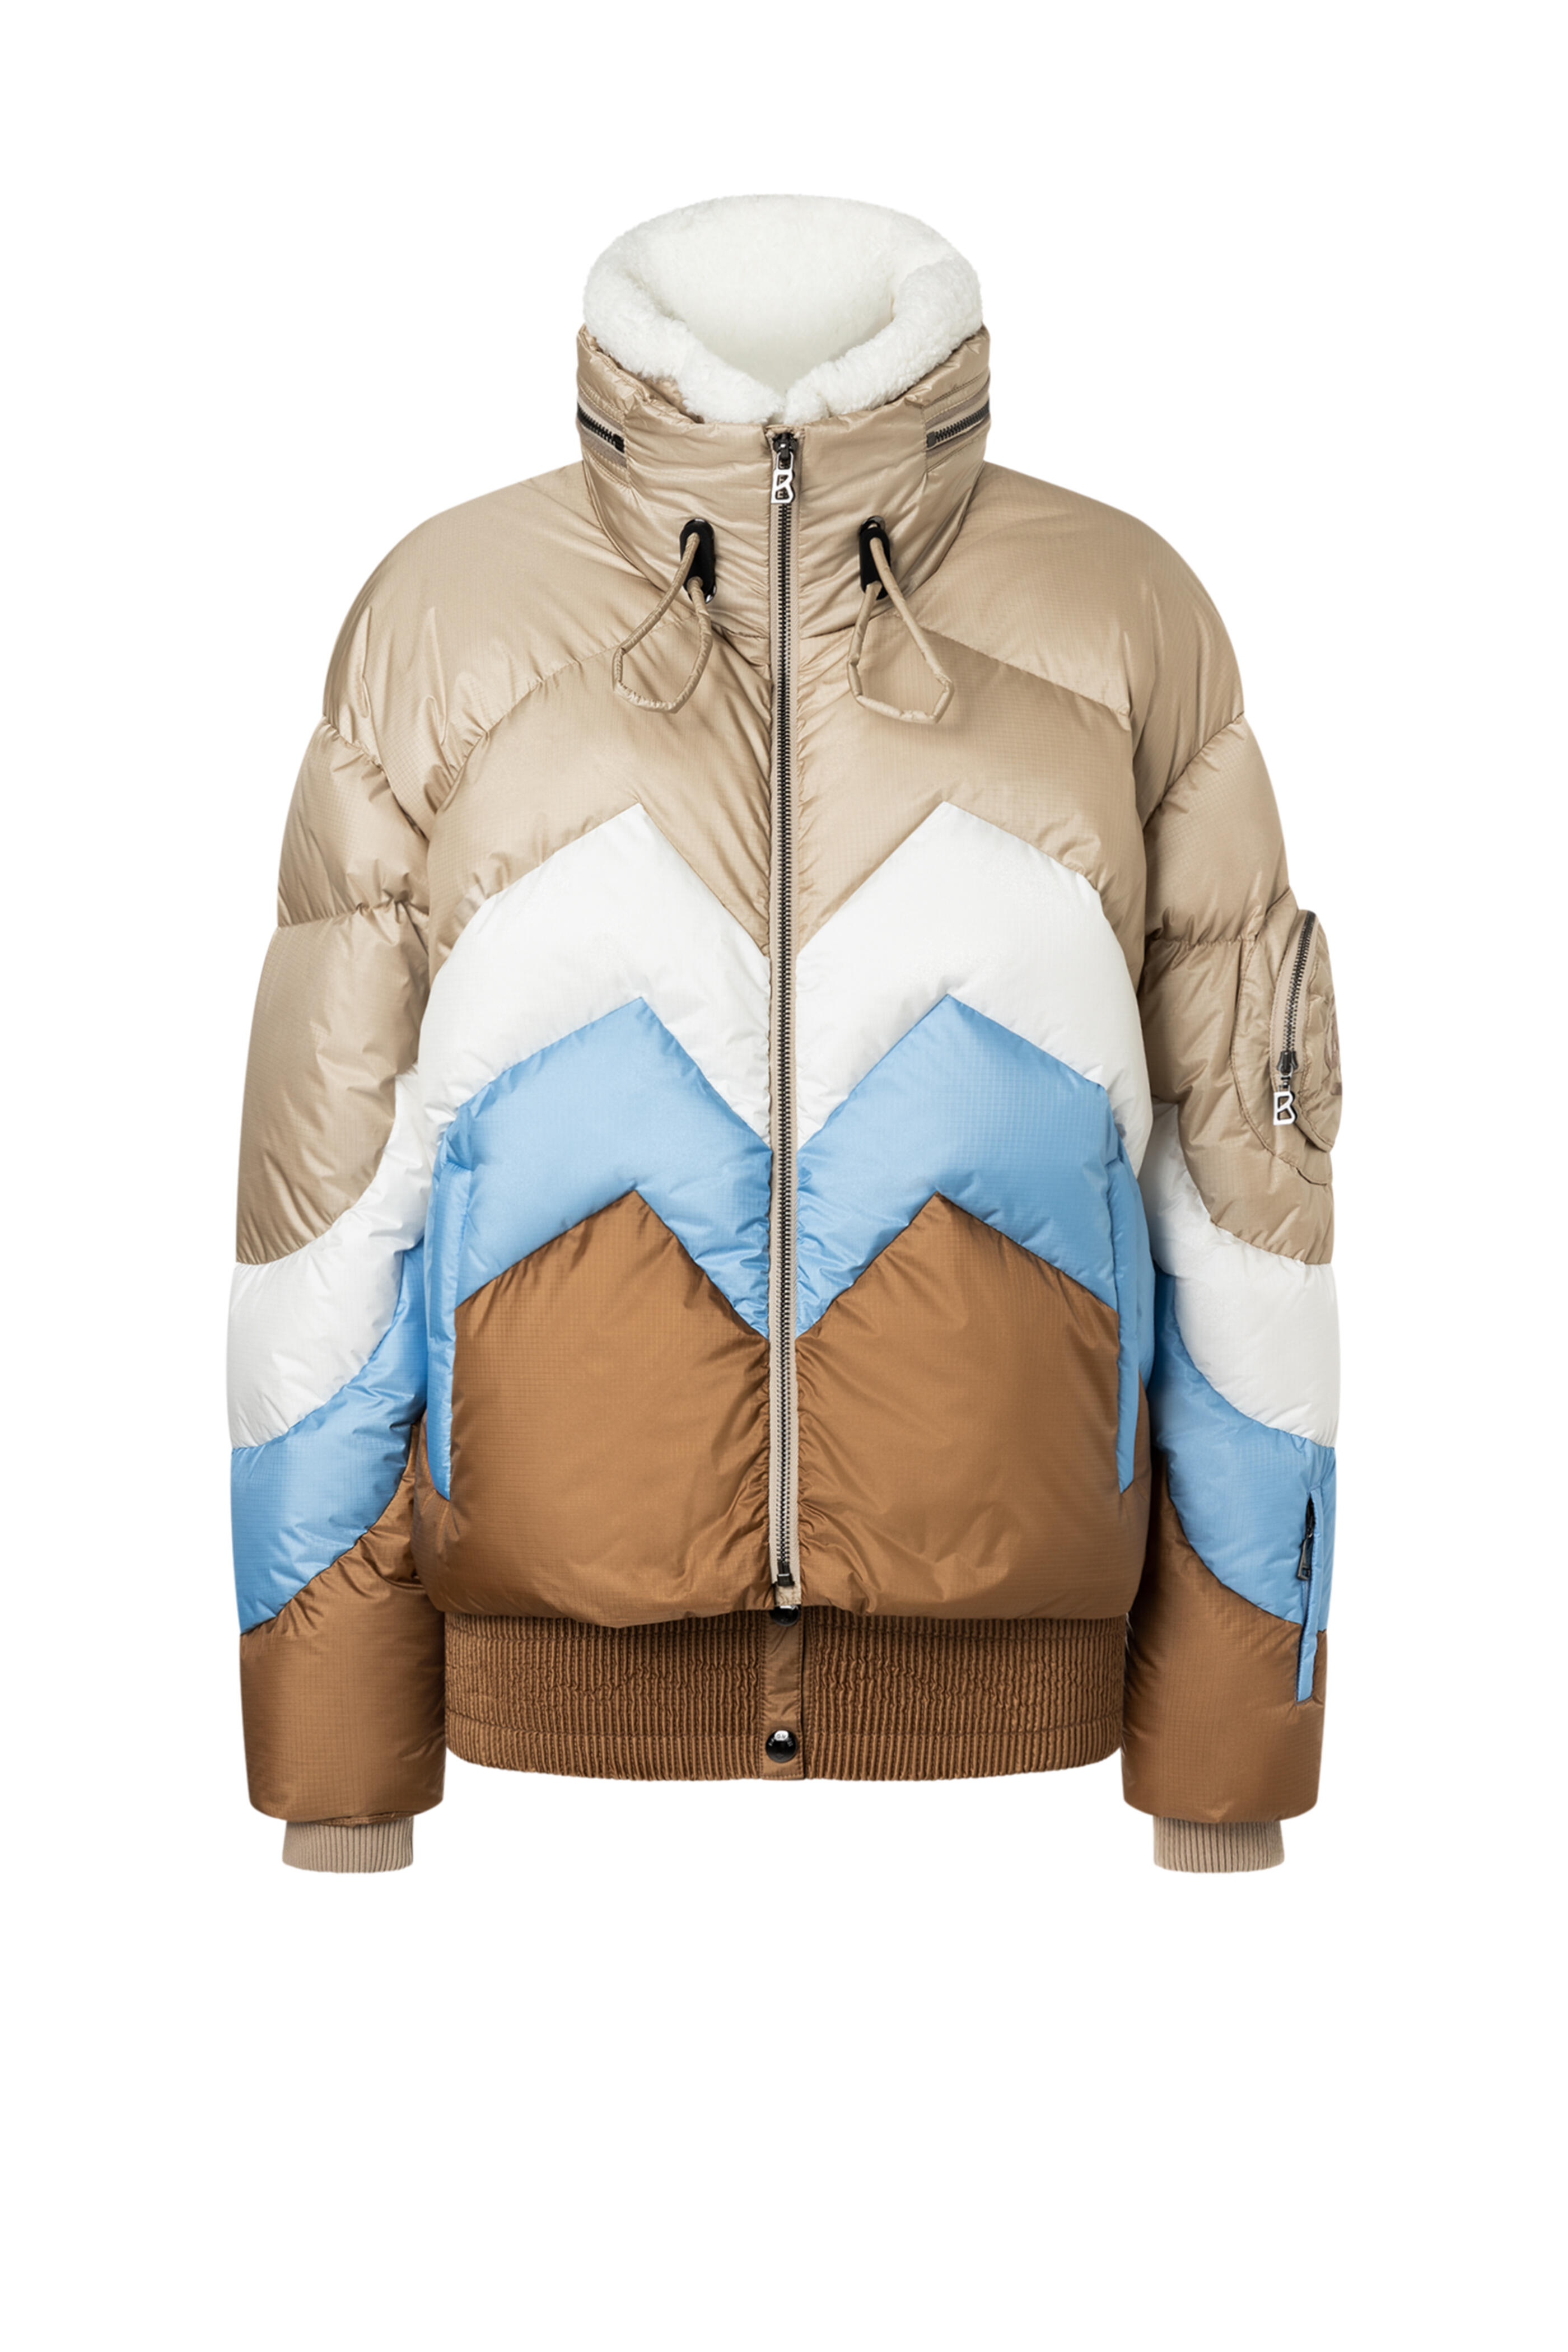 Bogner - Vanja Tan, Blue & Brown Chevron Ski Jacket